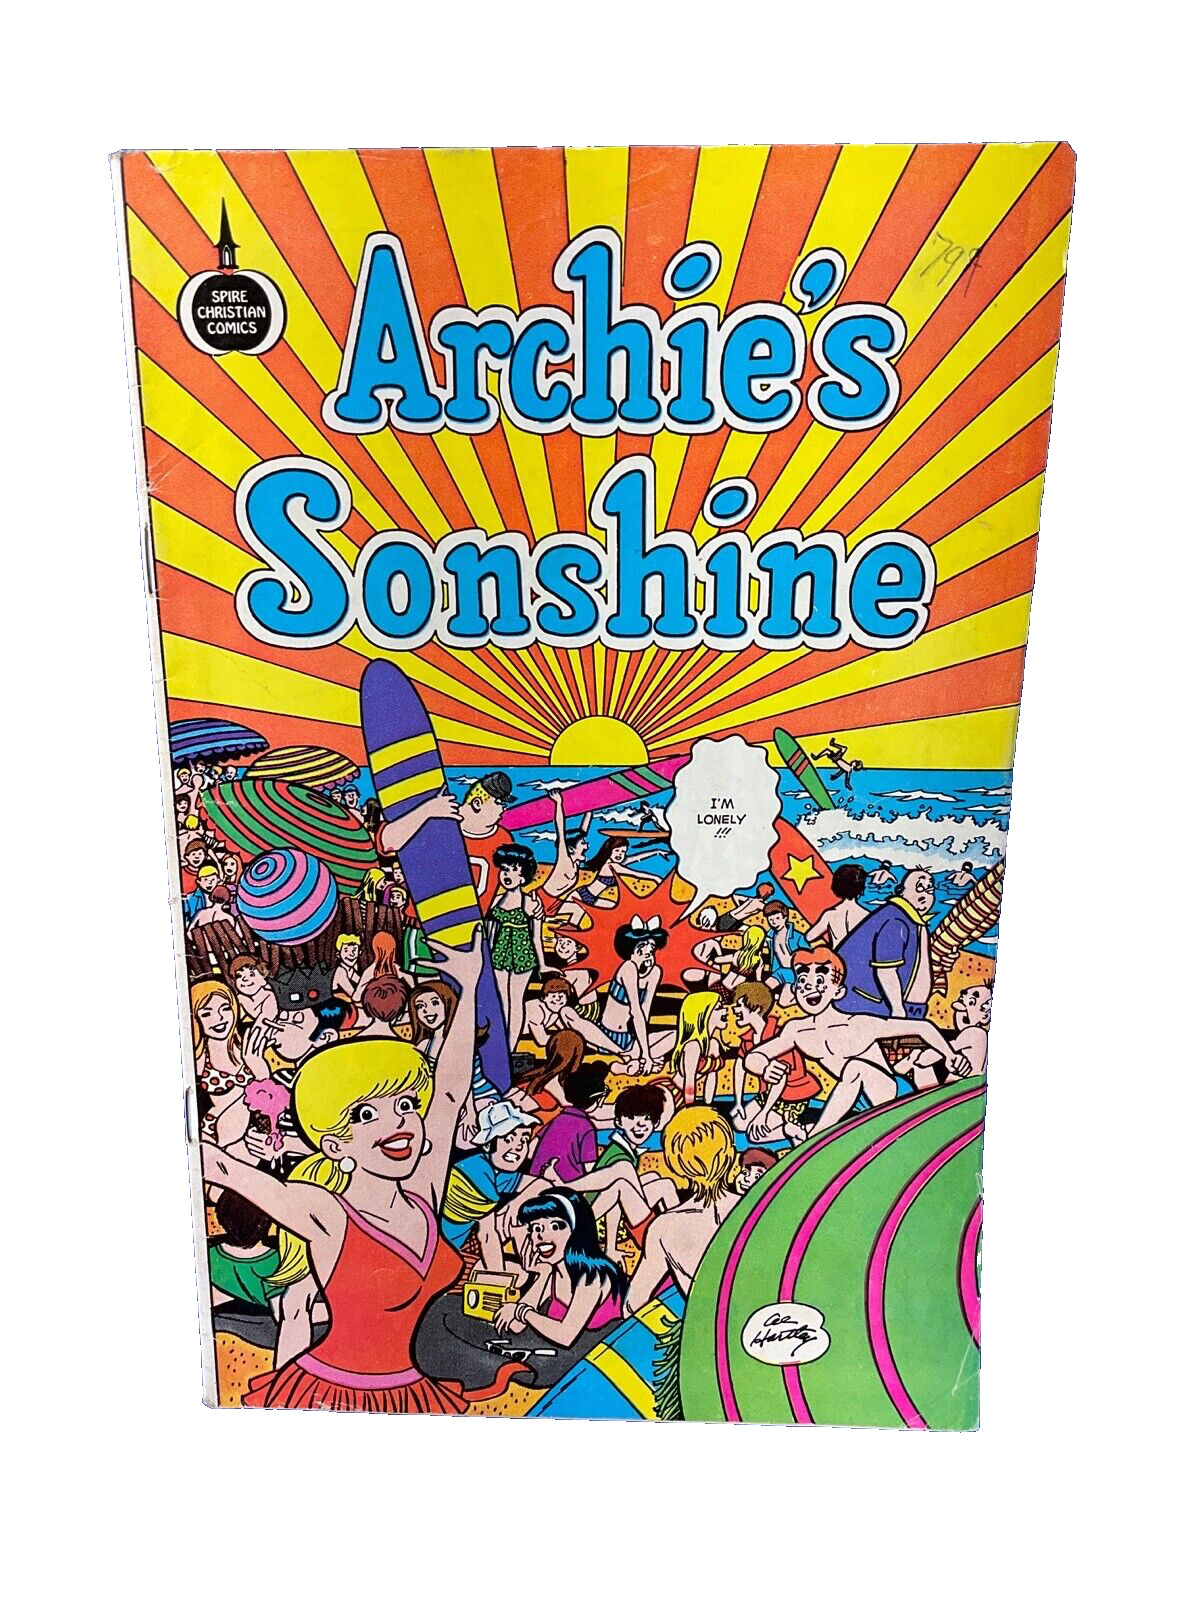 Archie\'s Sonshine, Spire Christian Comics, 1974, 6.0 Fine, Bronze Age